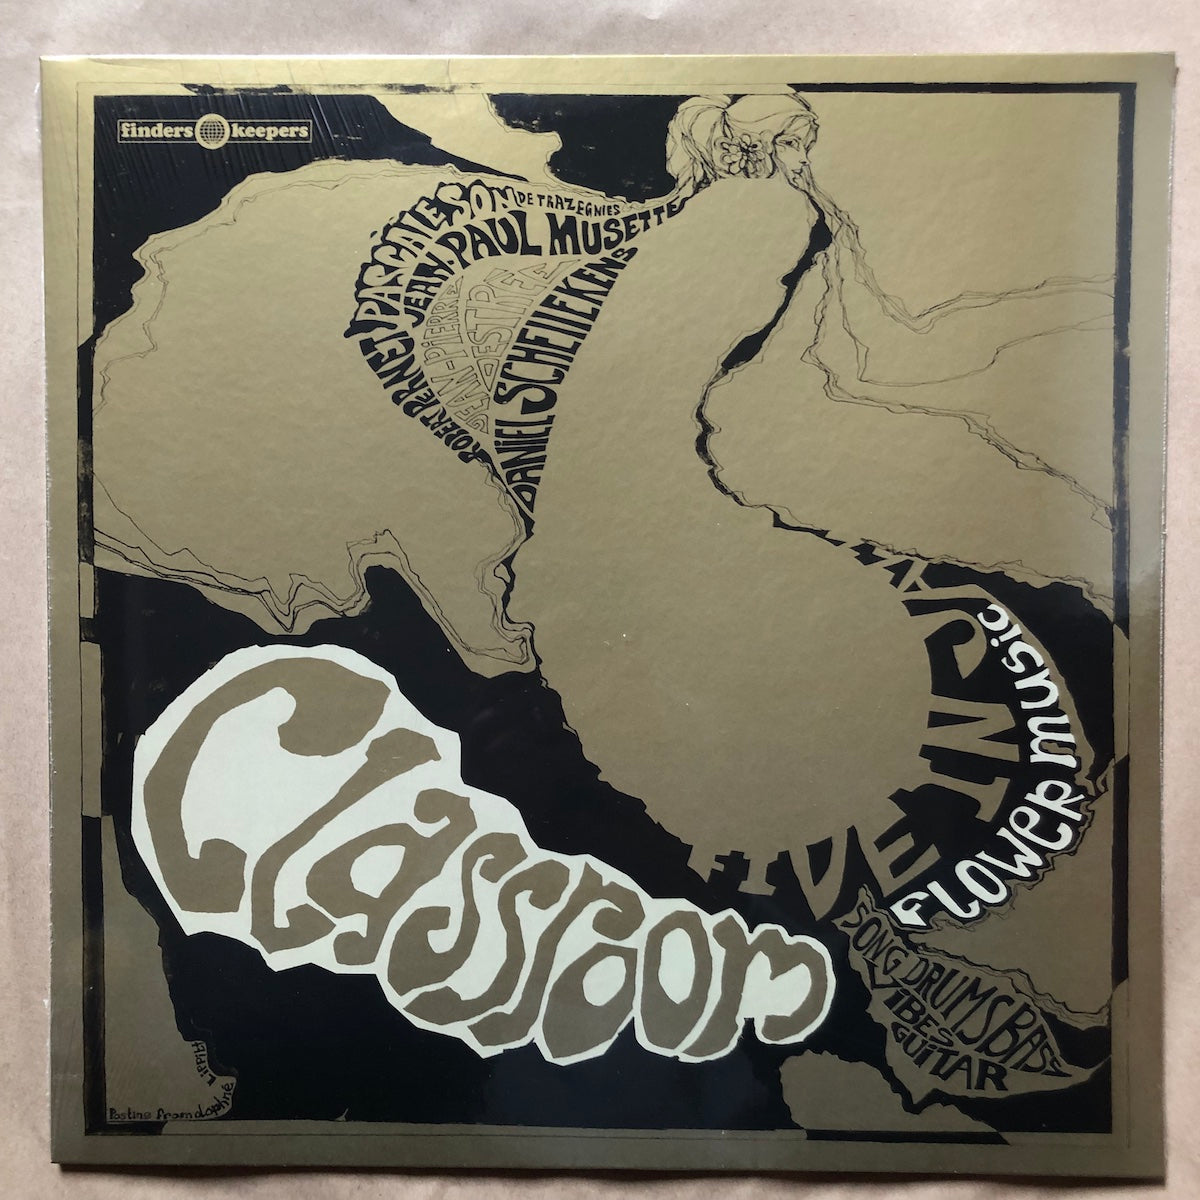 Classroom: Vinyl LP